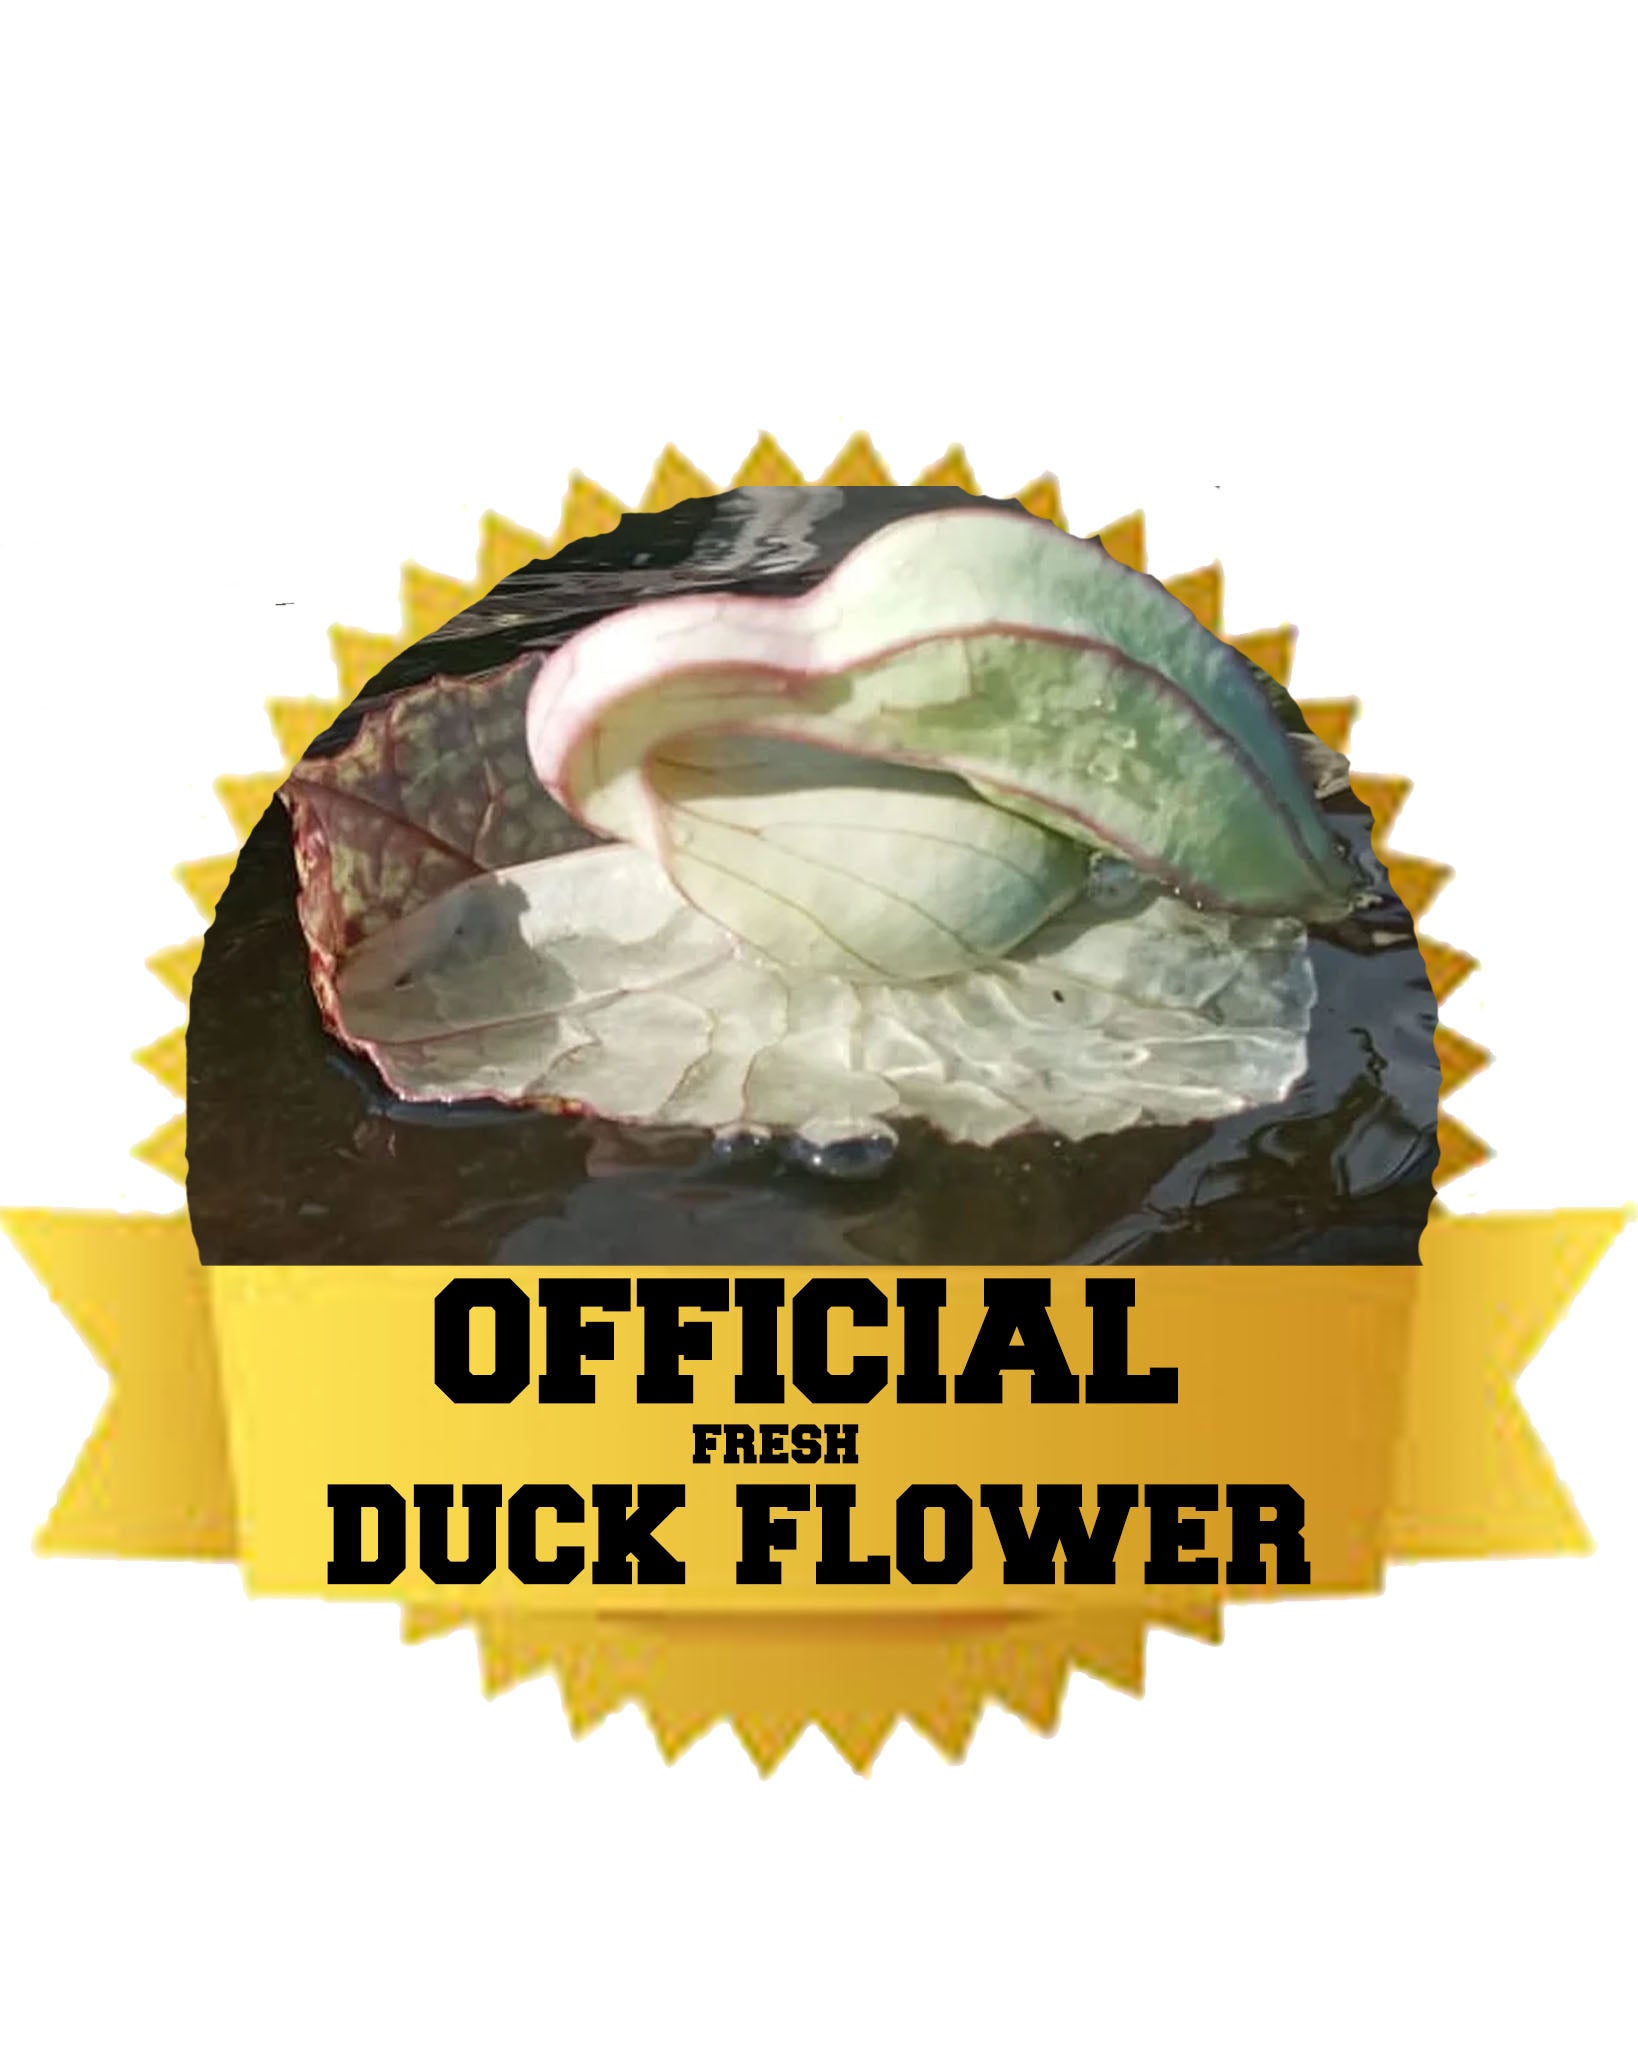 The Jamaican Duck Flower